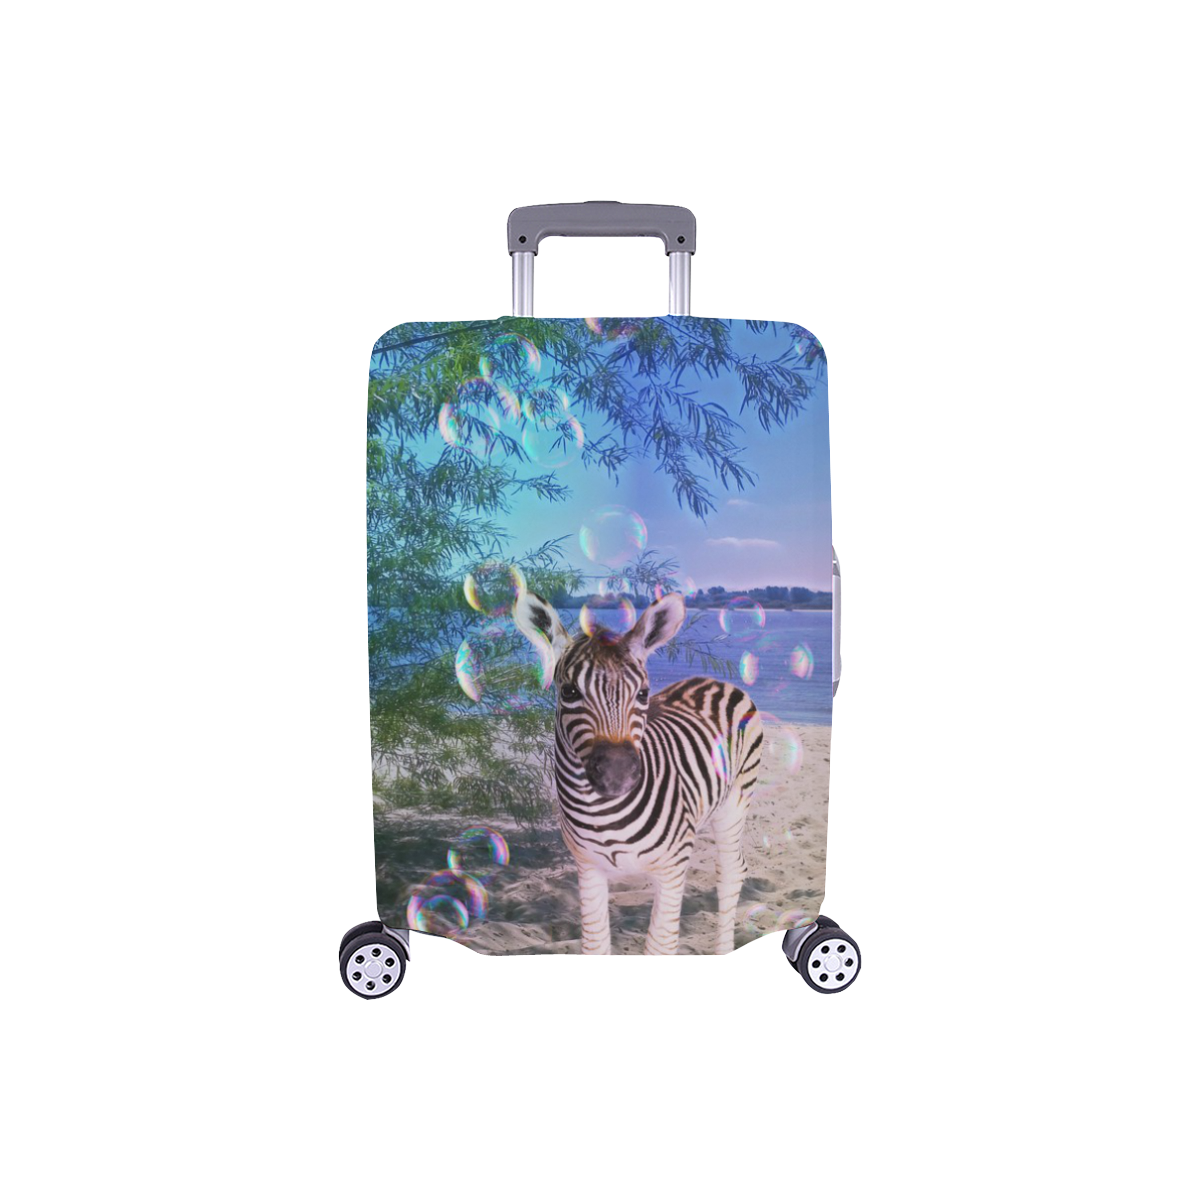 Little cute zebra Luggage Cover/Small 18"-21"